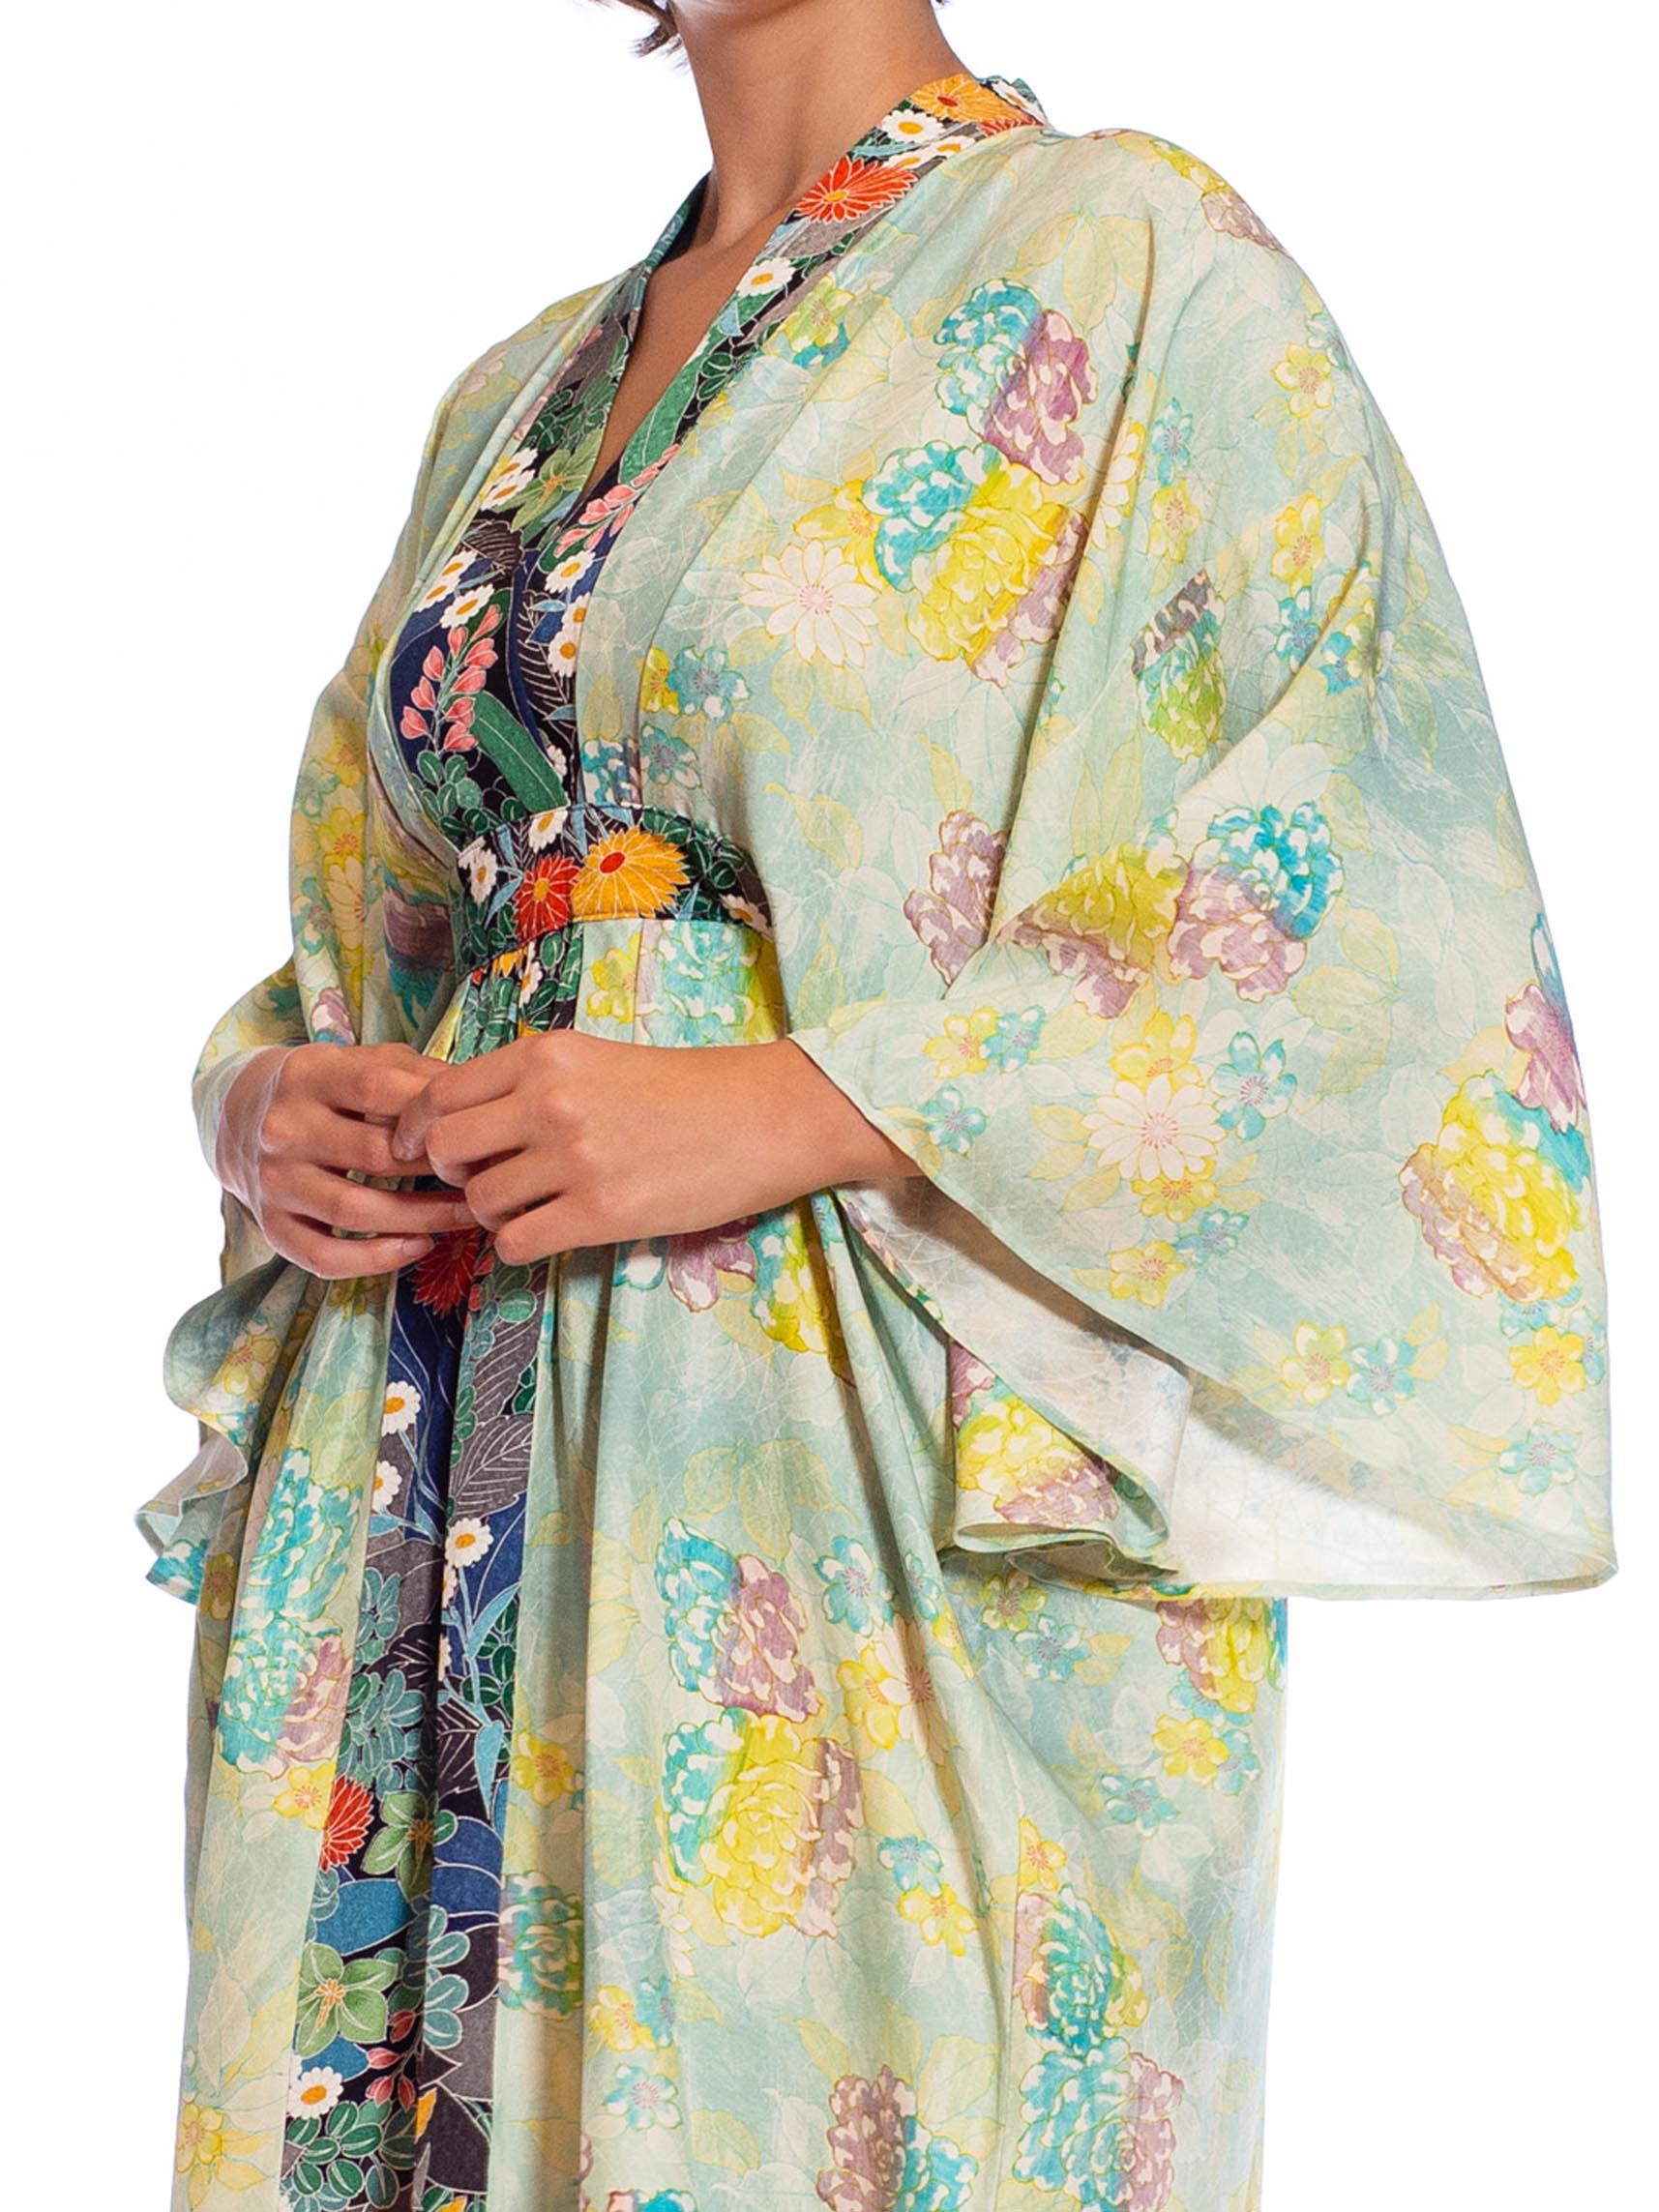 MORPHEW COLLECTION Teal Japanese Kimono Silk Floral Pattern Kaftan Dark Blue An For Sale 3